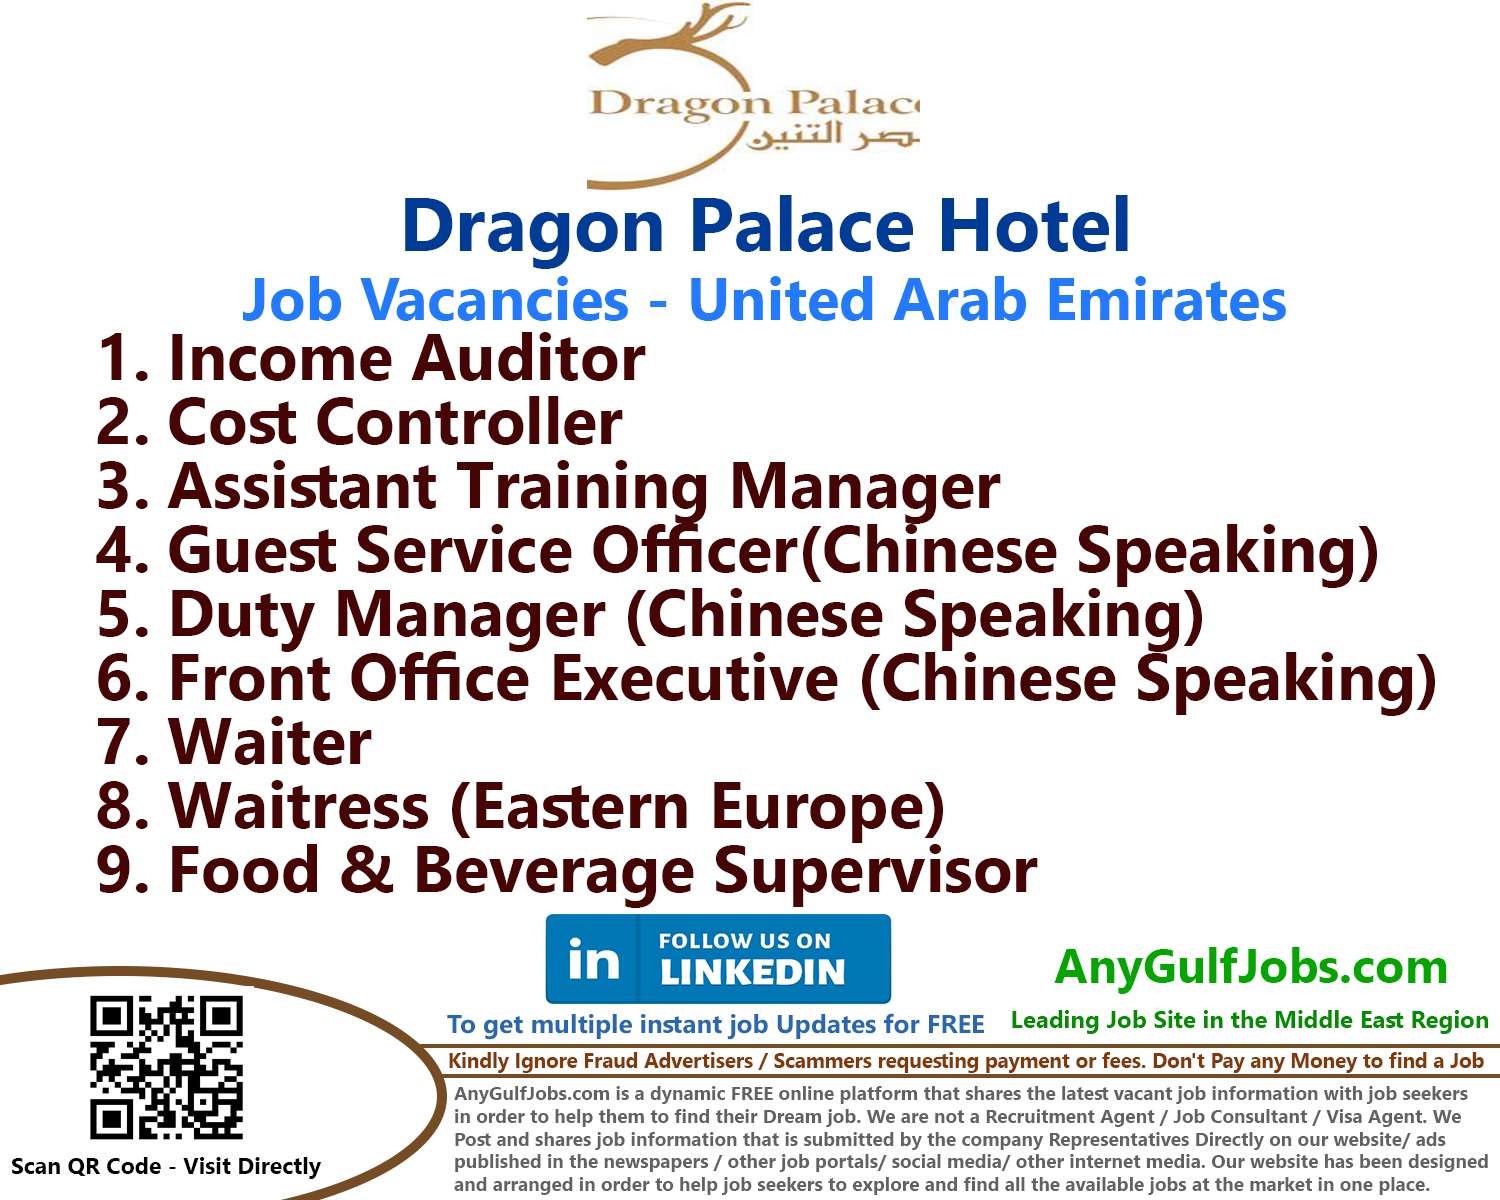 List of Dragon Palace Hotel Jobs - United Arab Emirates